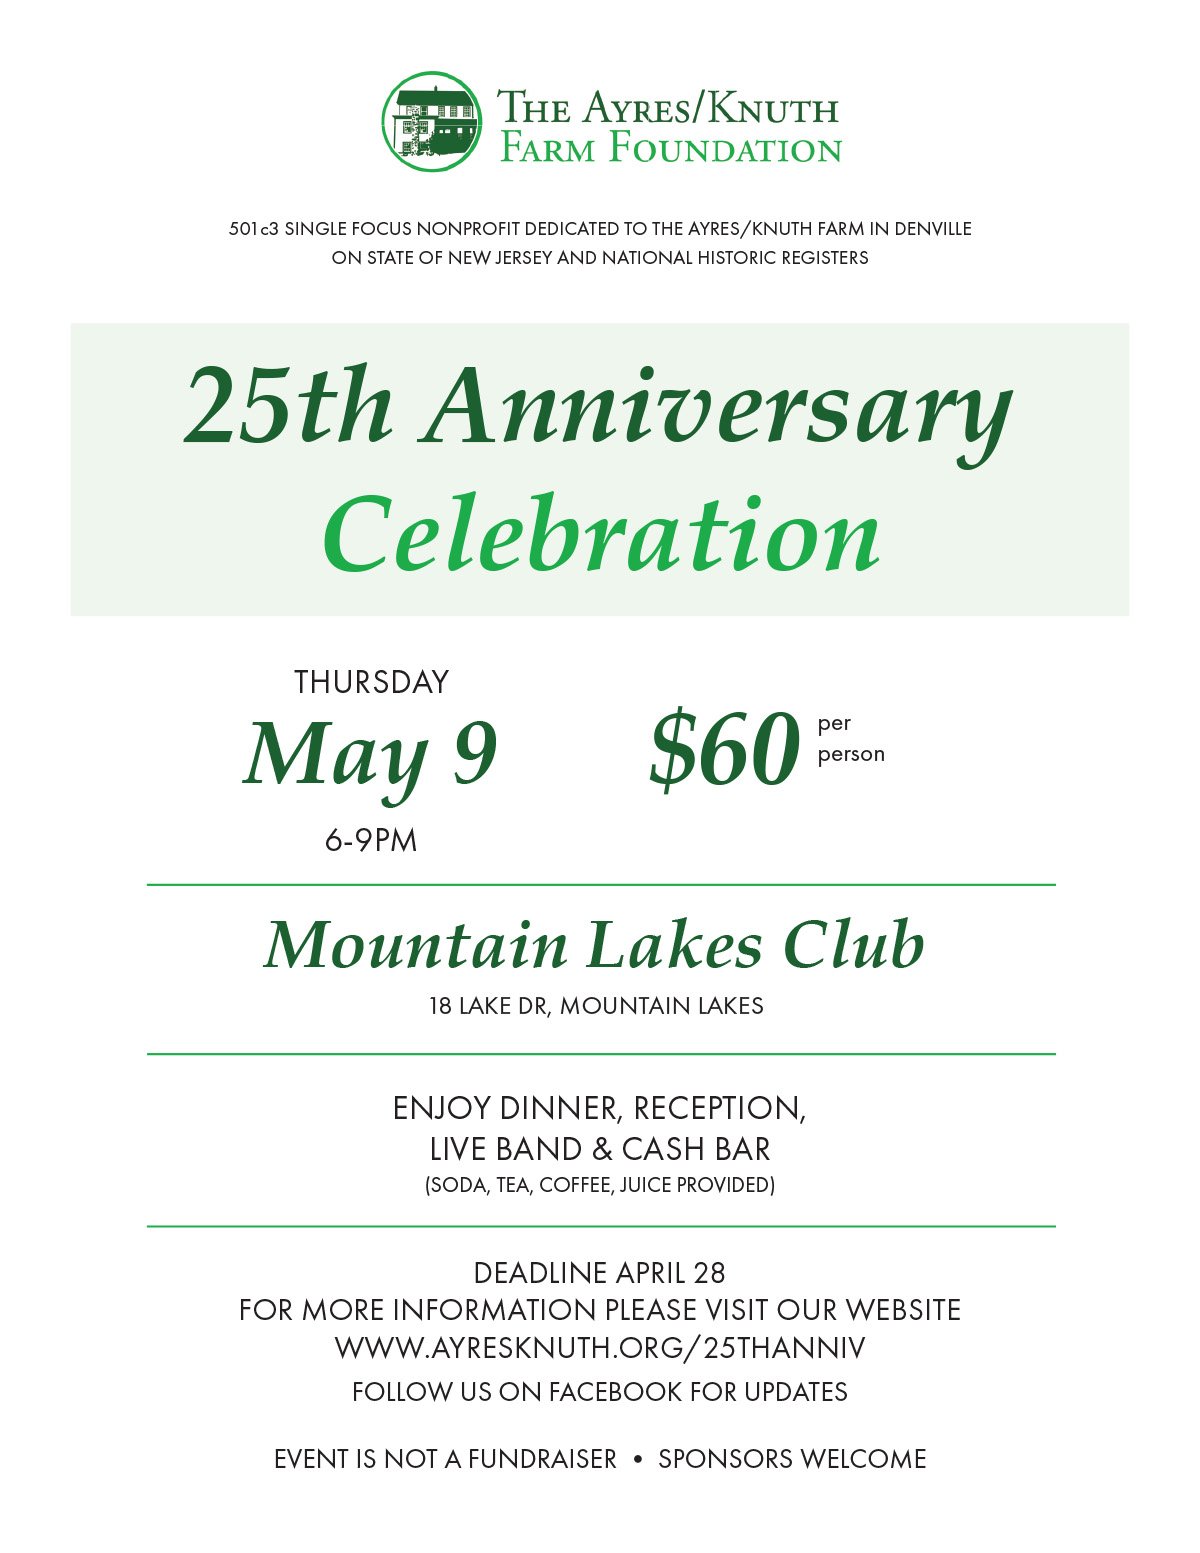 25th Anniversary Celebration - The Ayres/Knuth Farm Foundation Event Flyer